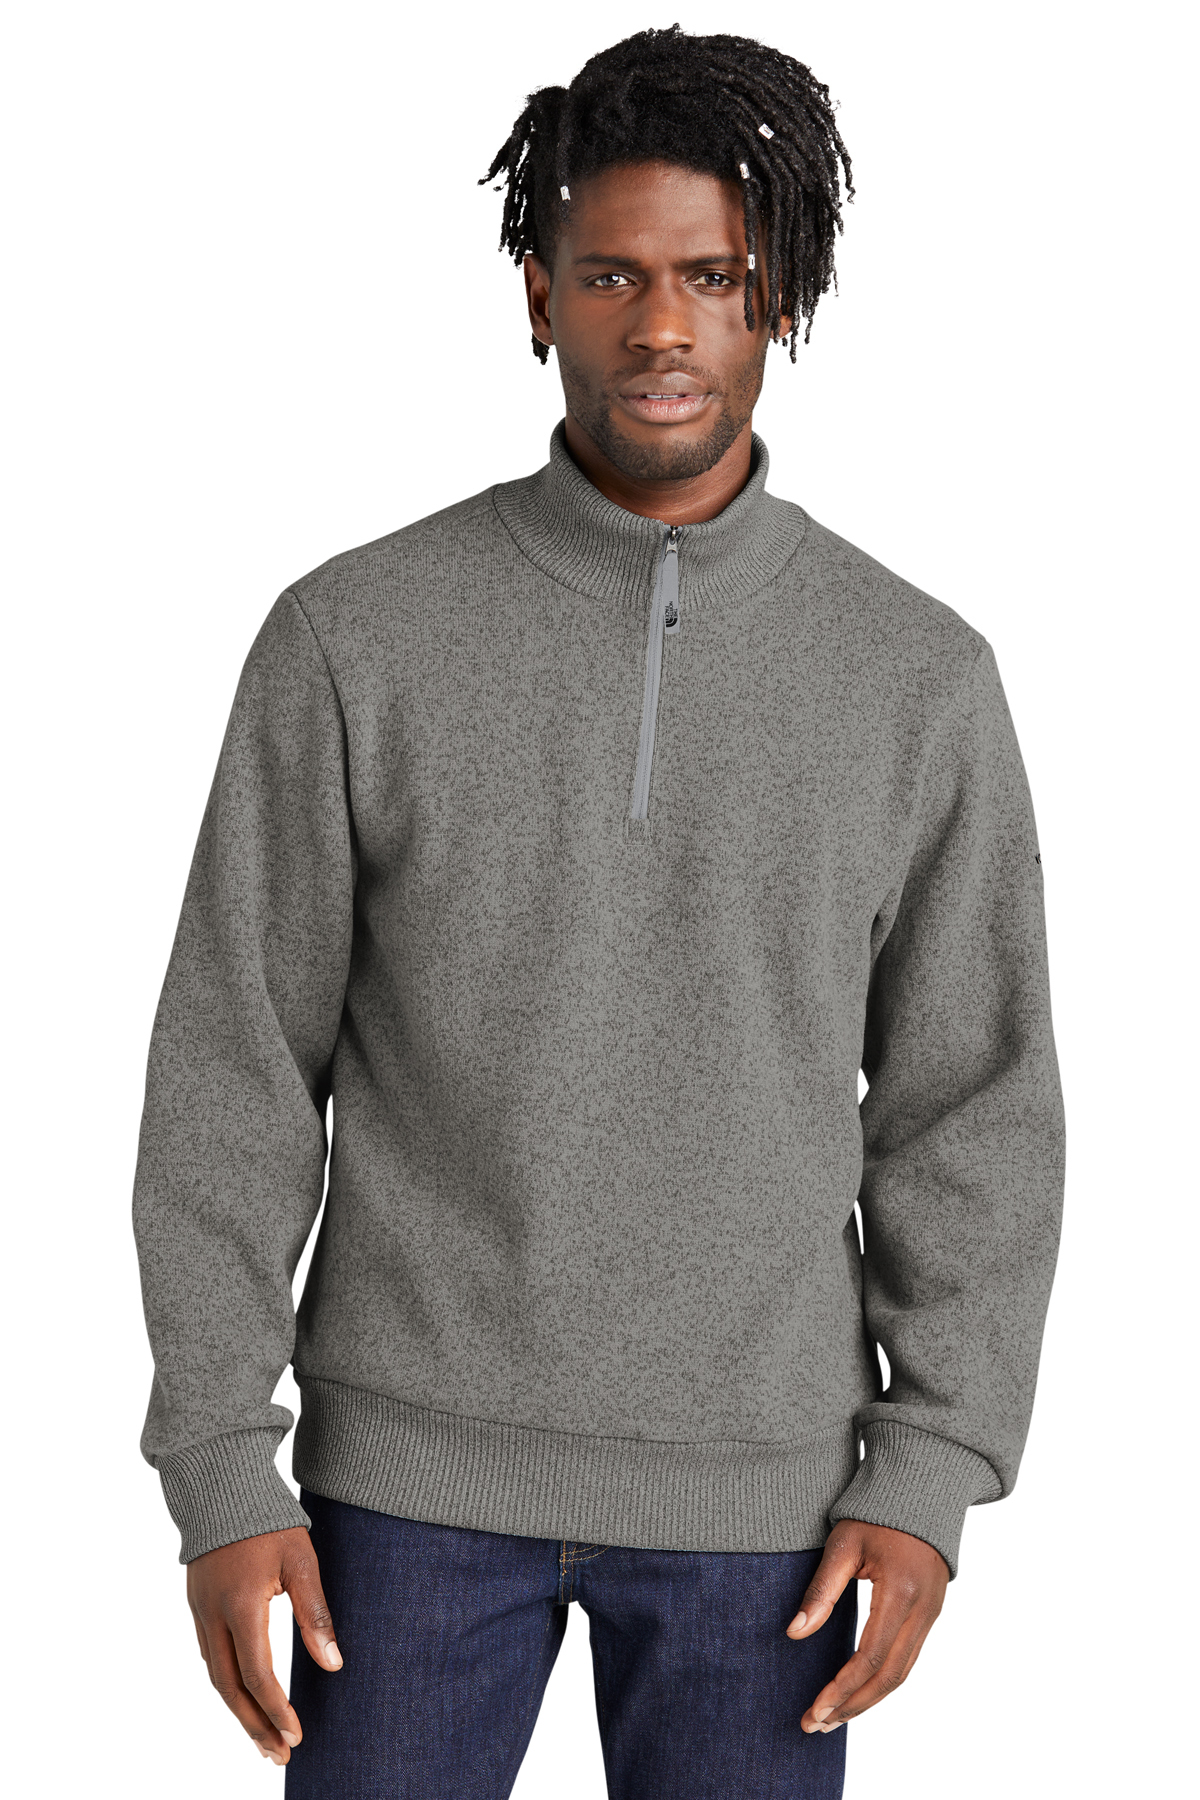 veiling scheuren Gewoon doen North Face® Pullover 1/2-Zip Sweater Fleece-NFOA51SE | Central Uniforms